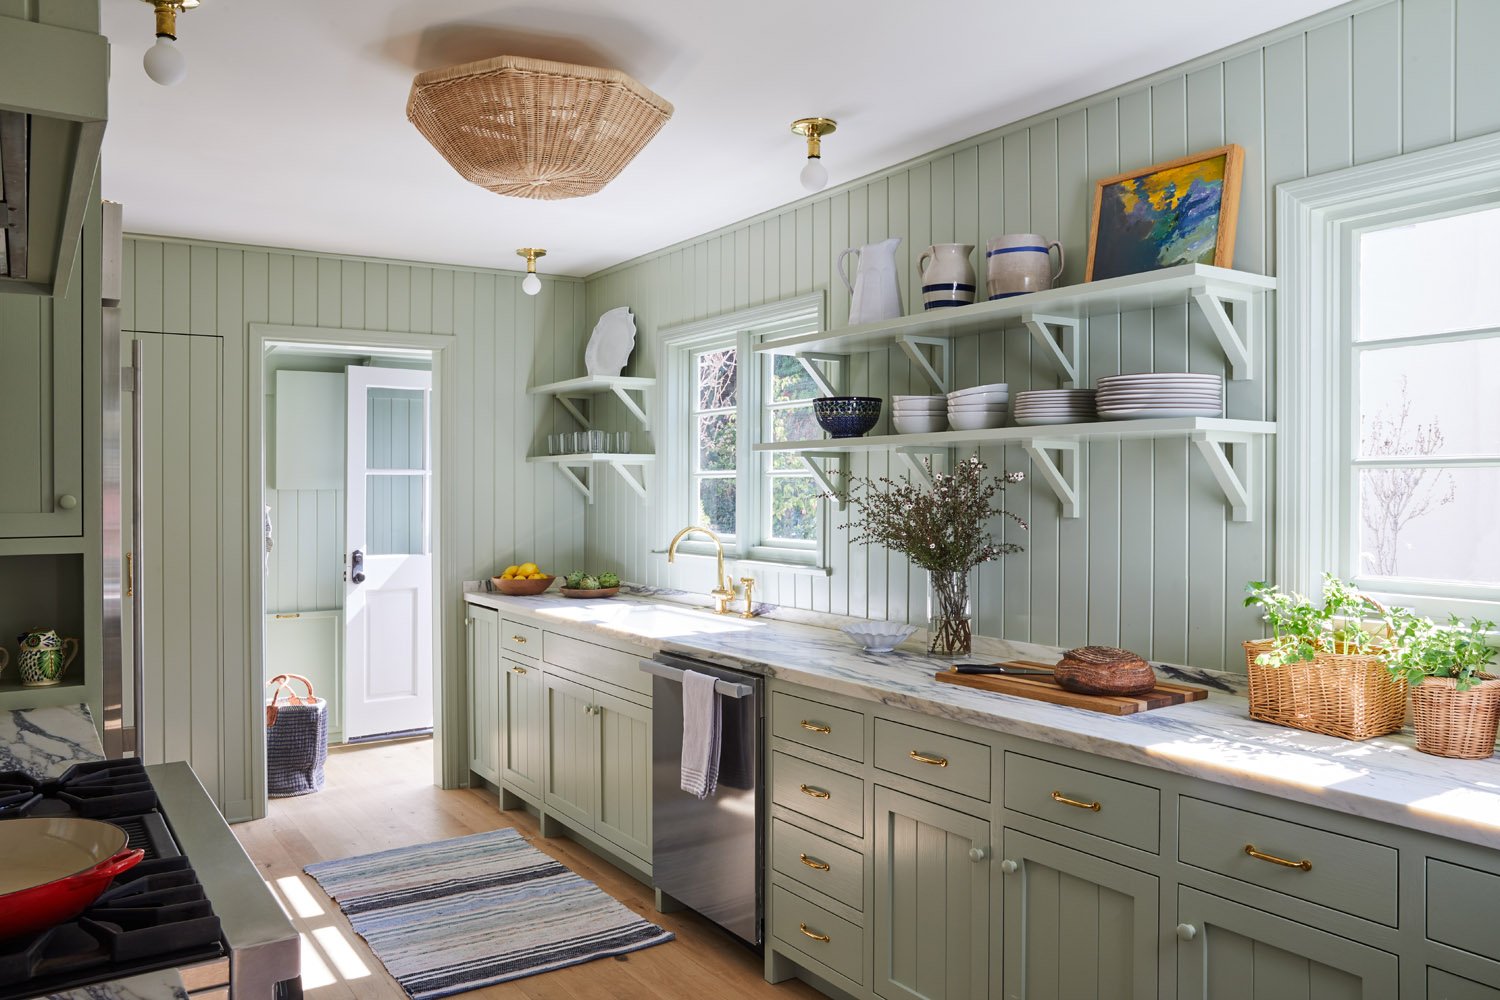 The Oaks-Ming Green Kitchen-Gallyway-Sherwood Kypreos.jpg